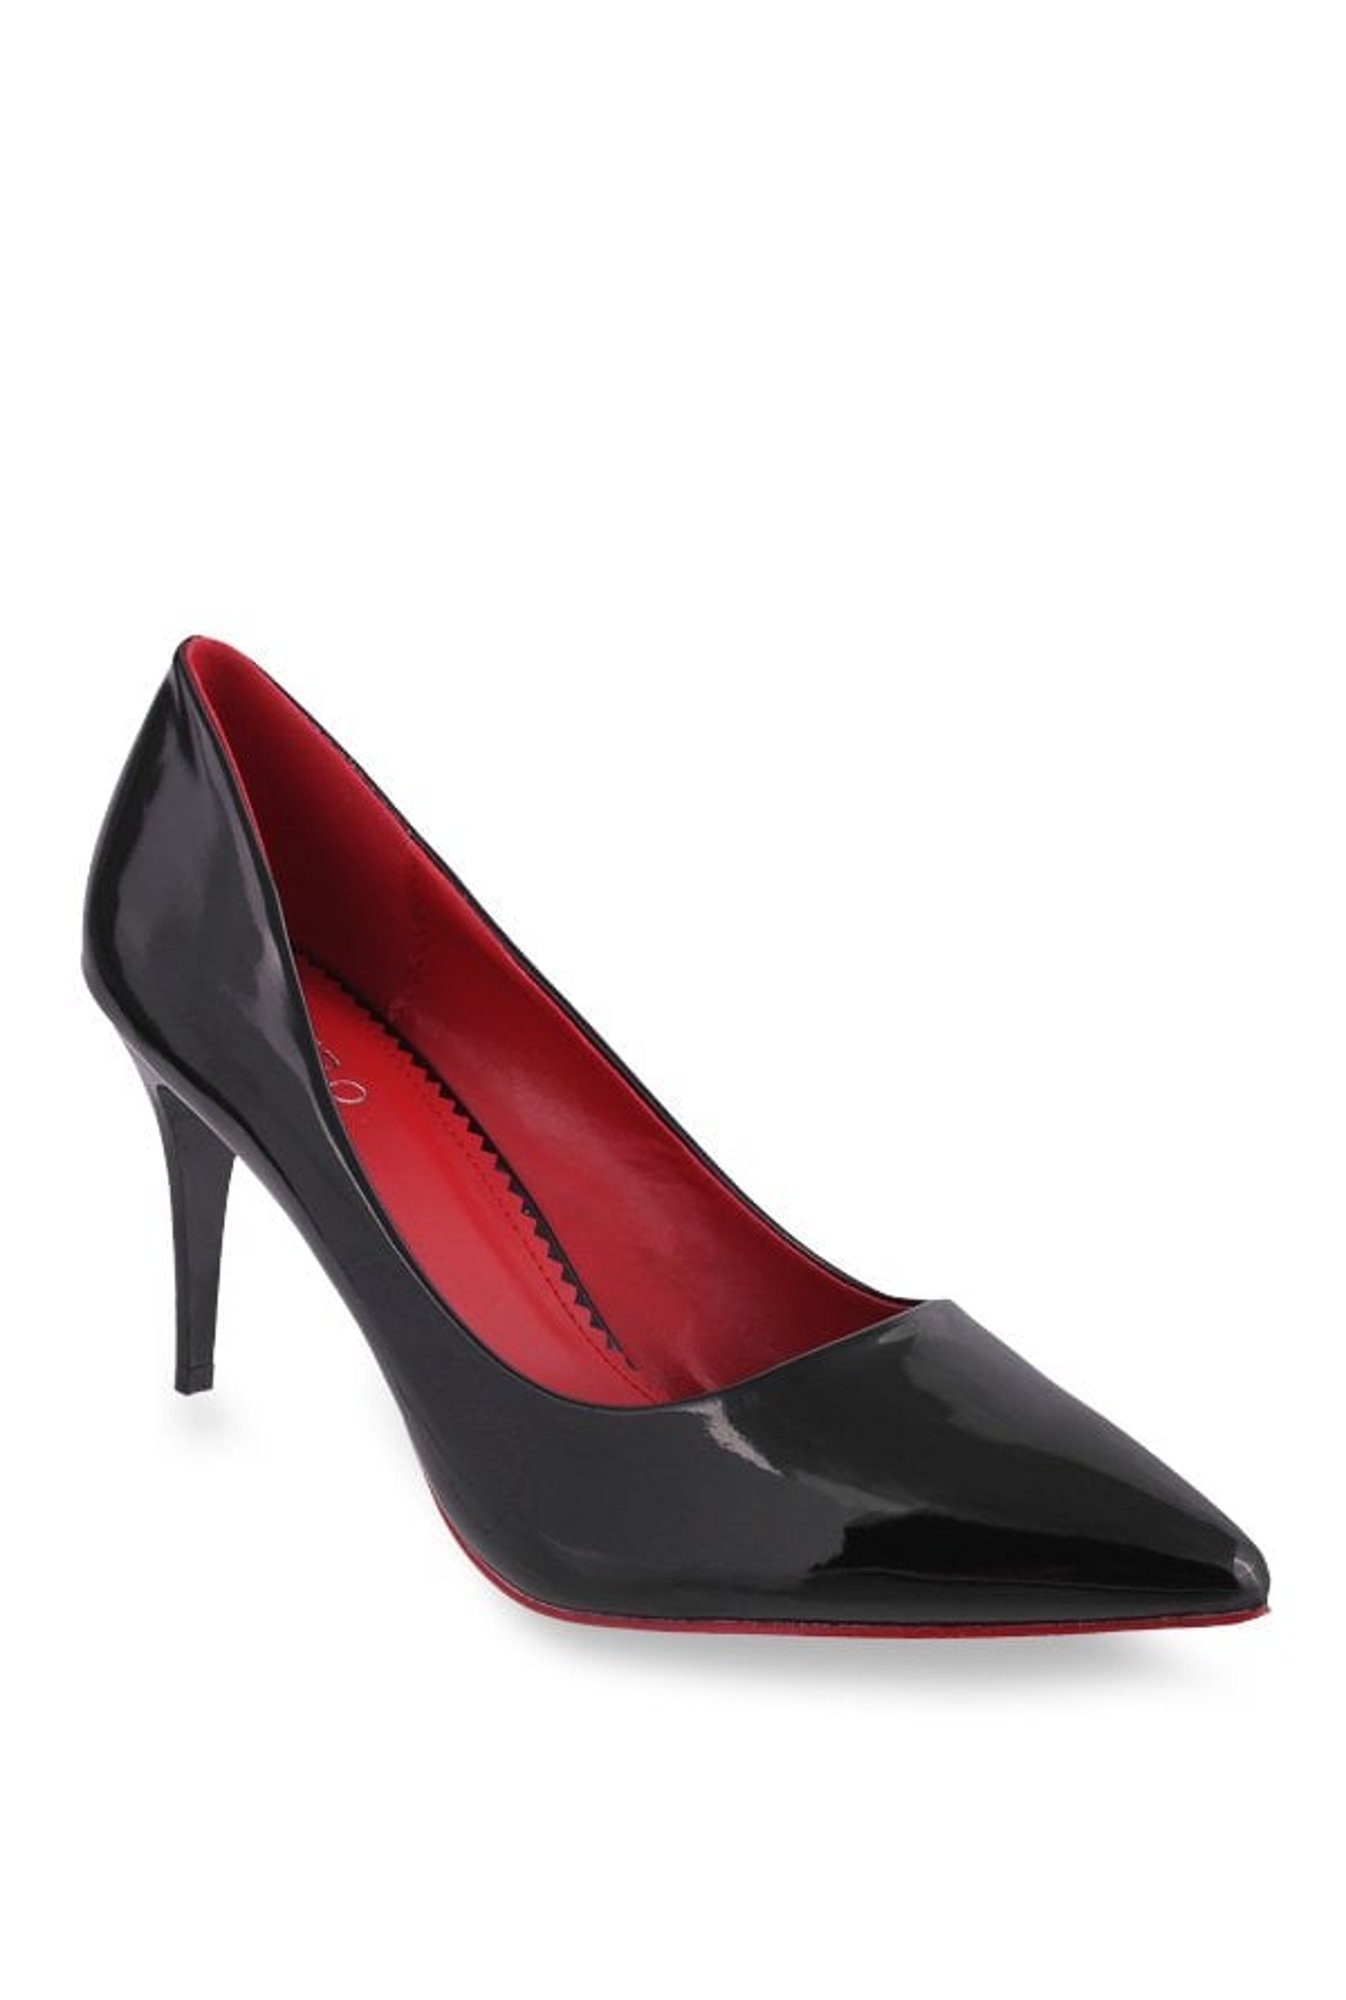 Buy Black High Heels for Women, Platform Heels Classic Elegant Round Toe  Suede Dress Pump Shoes(817-1-blackVE39) at Amazon.in